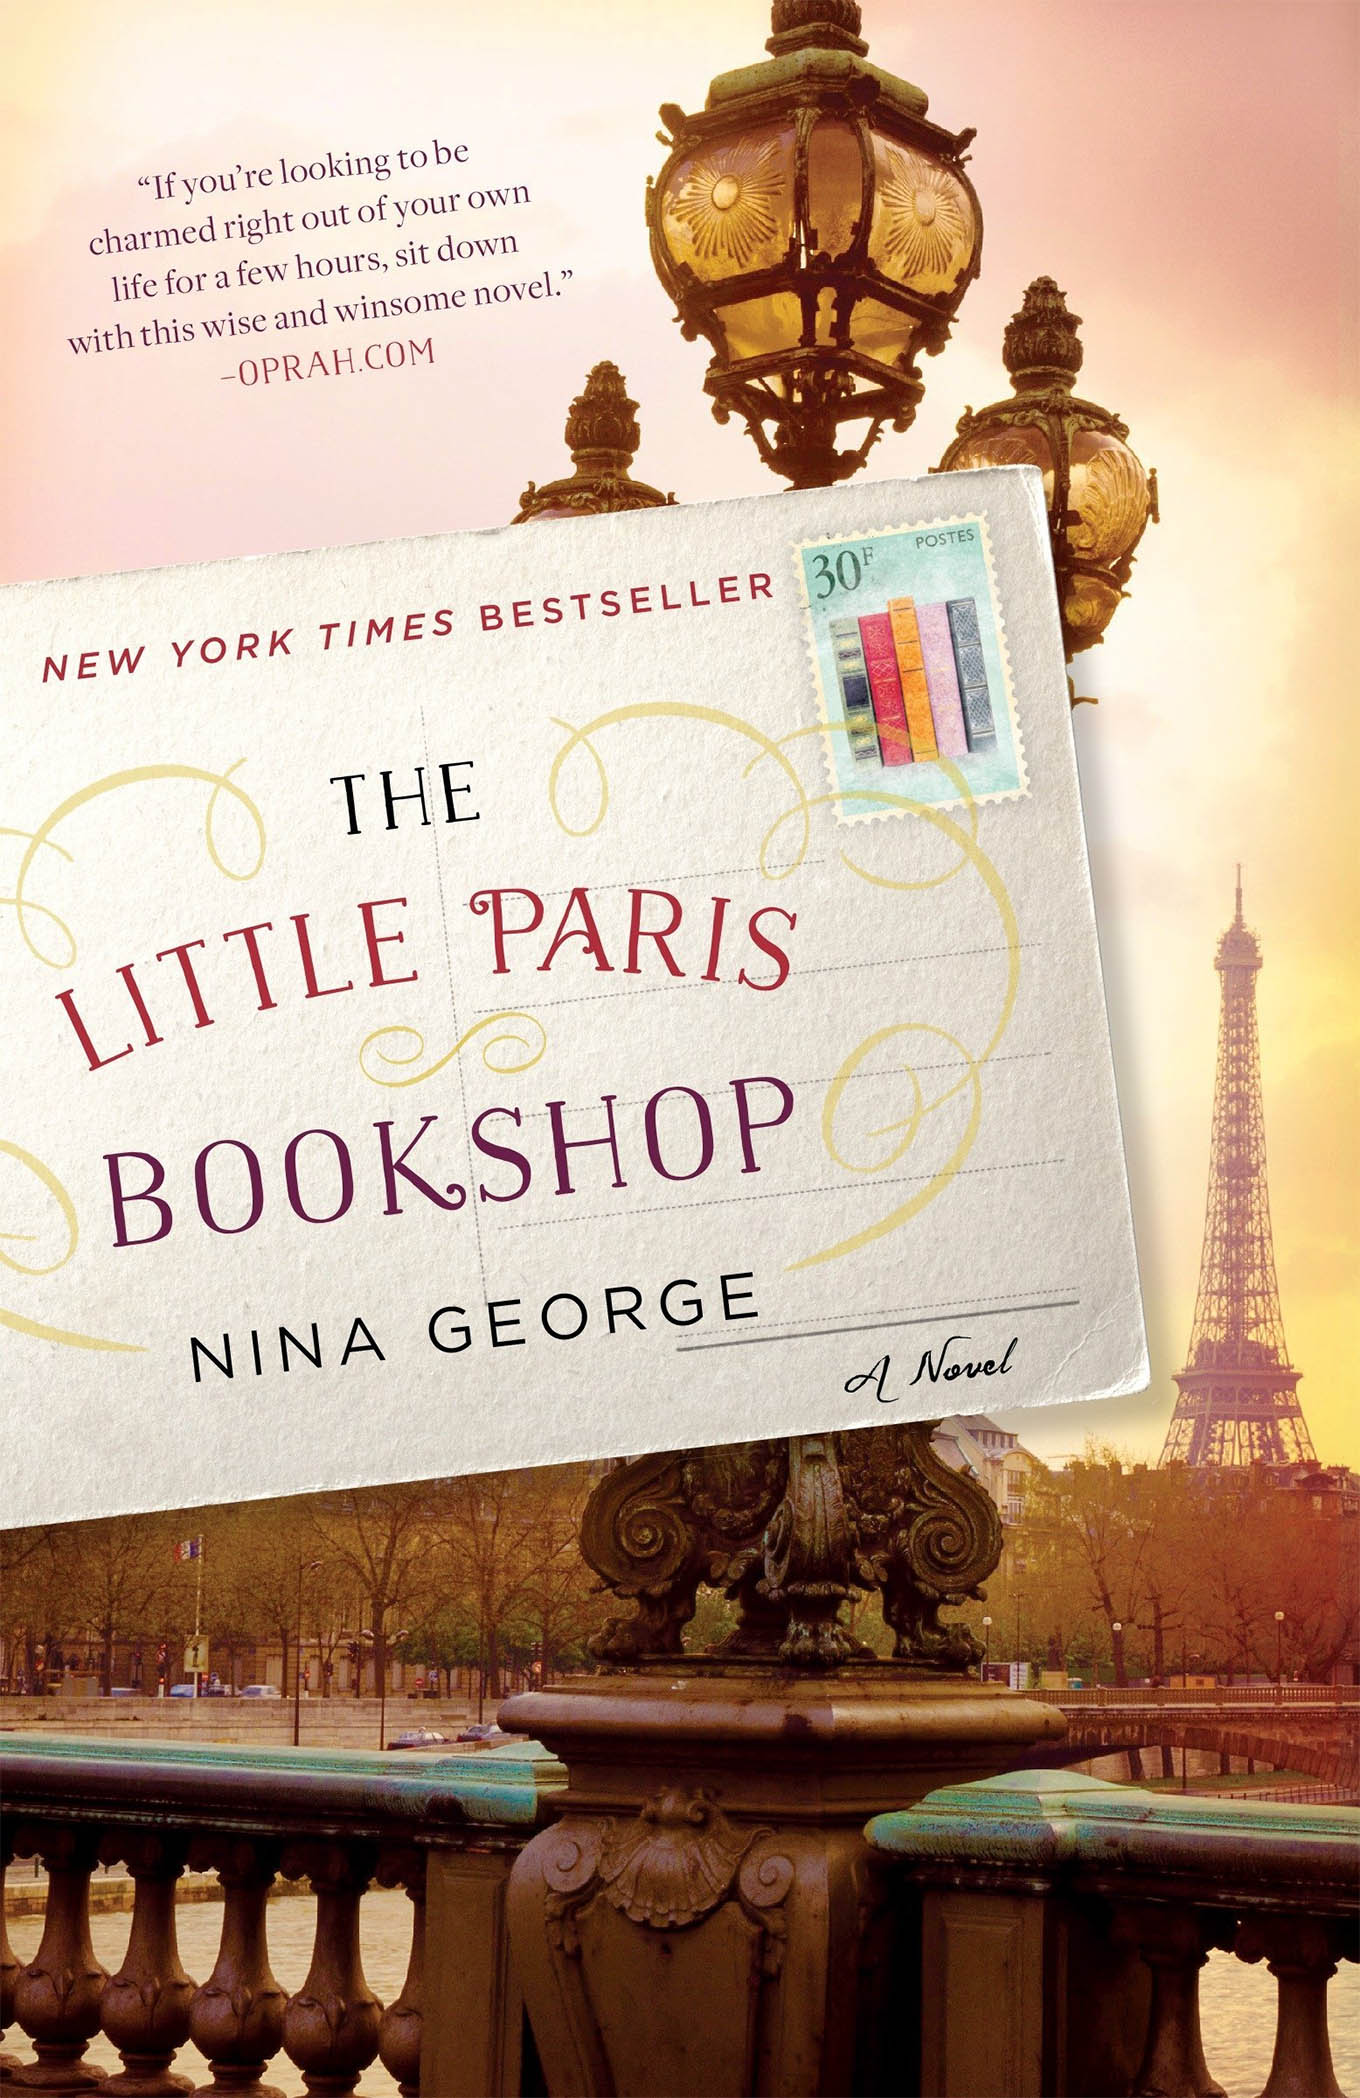 Ridgely Brode reviews'The Little Paris Bookshop' by Nina George on her blog Ridgely's Radar